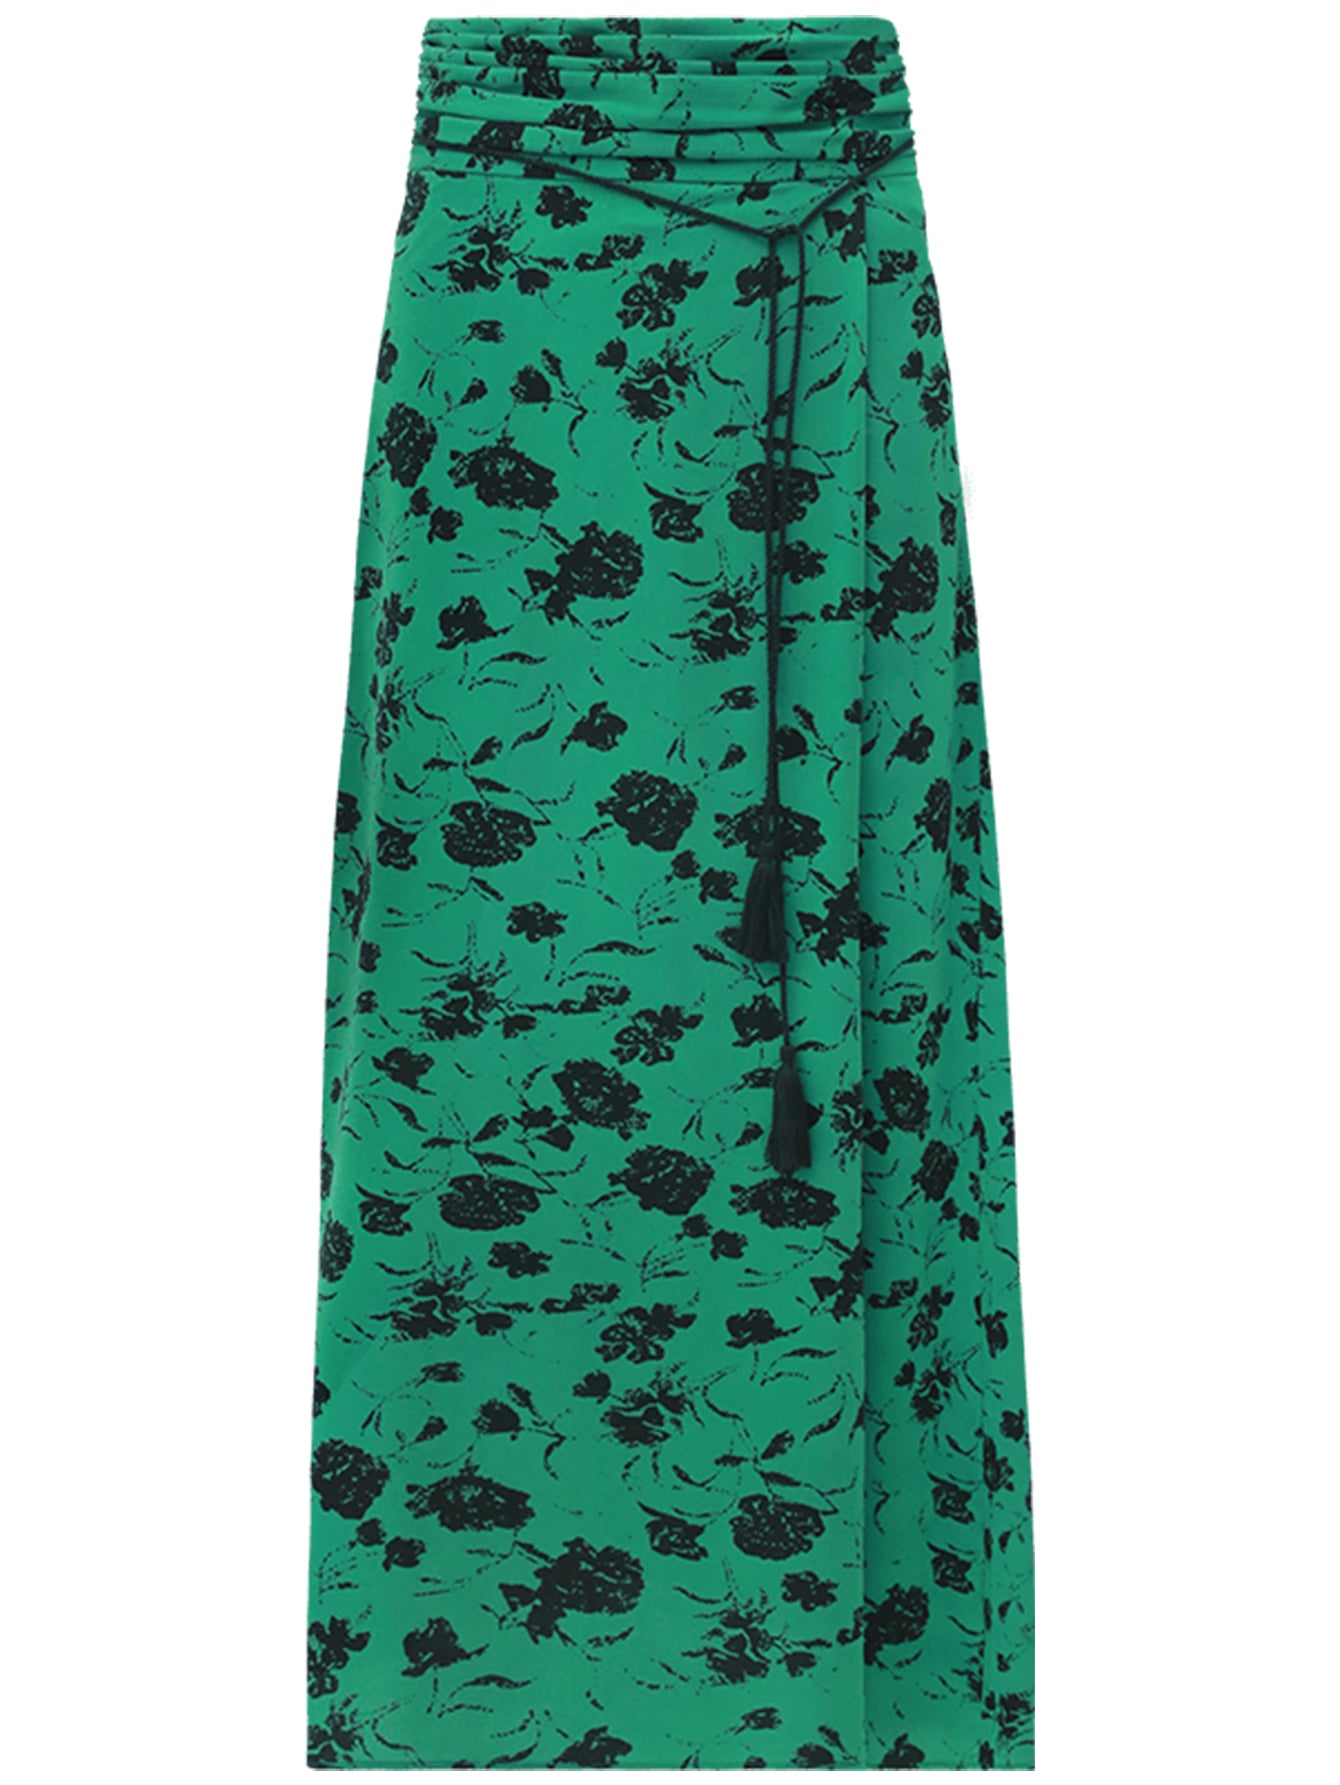 floral-green-and-black-high-waist-midi-skirt_all_green_4.jpg